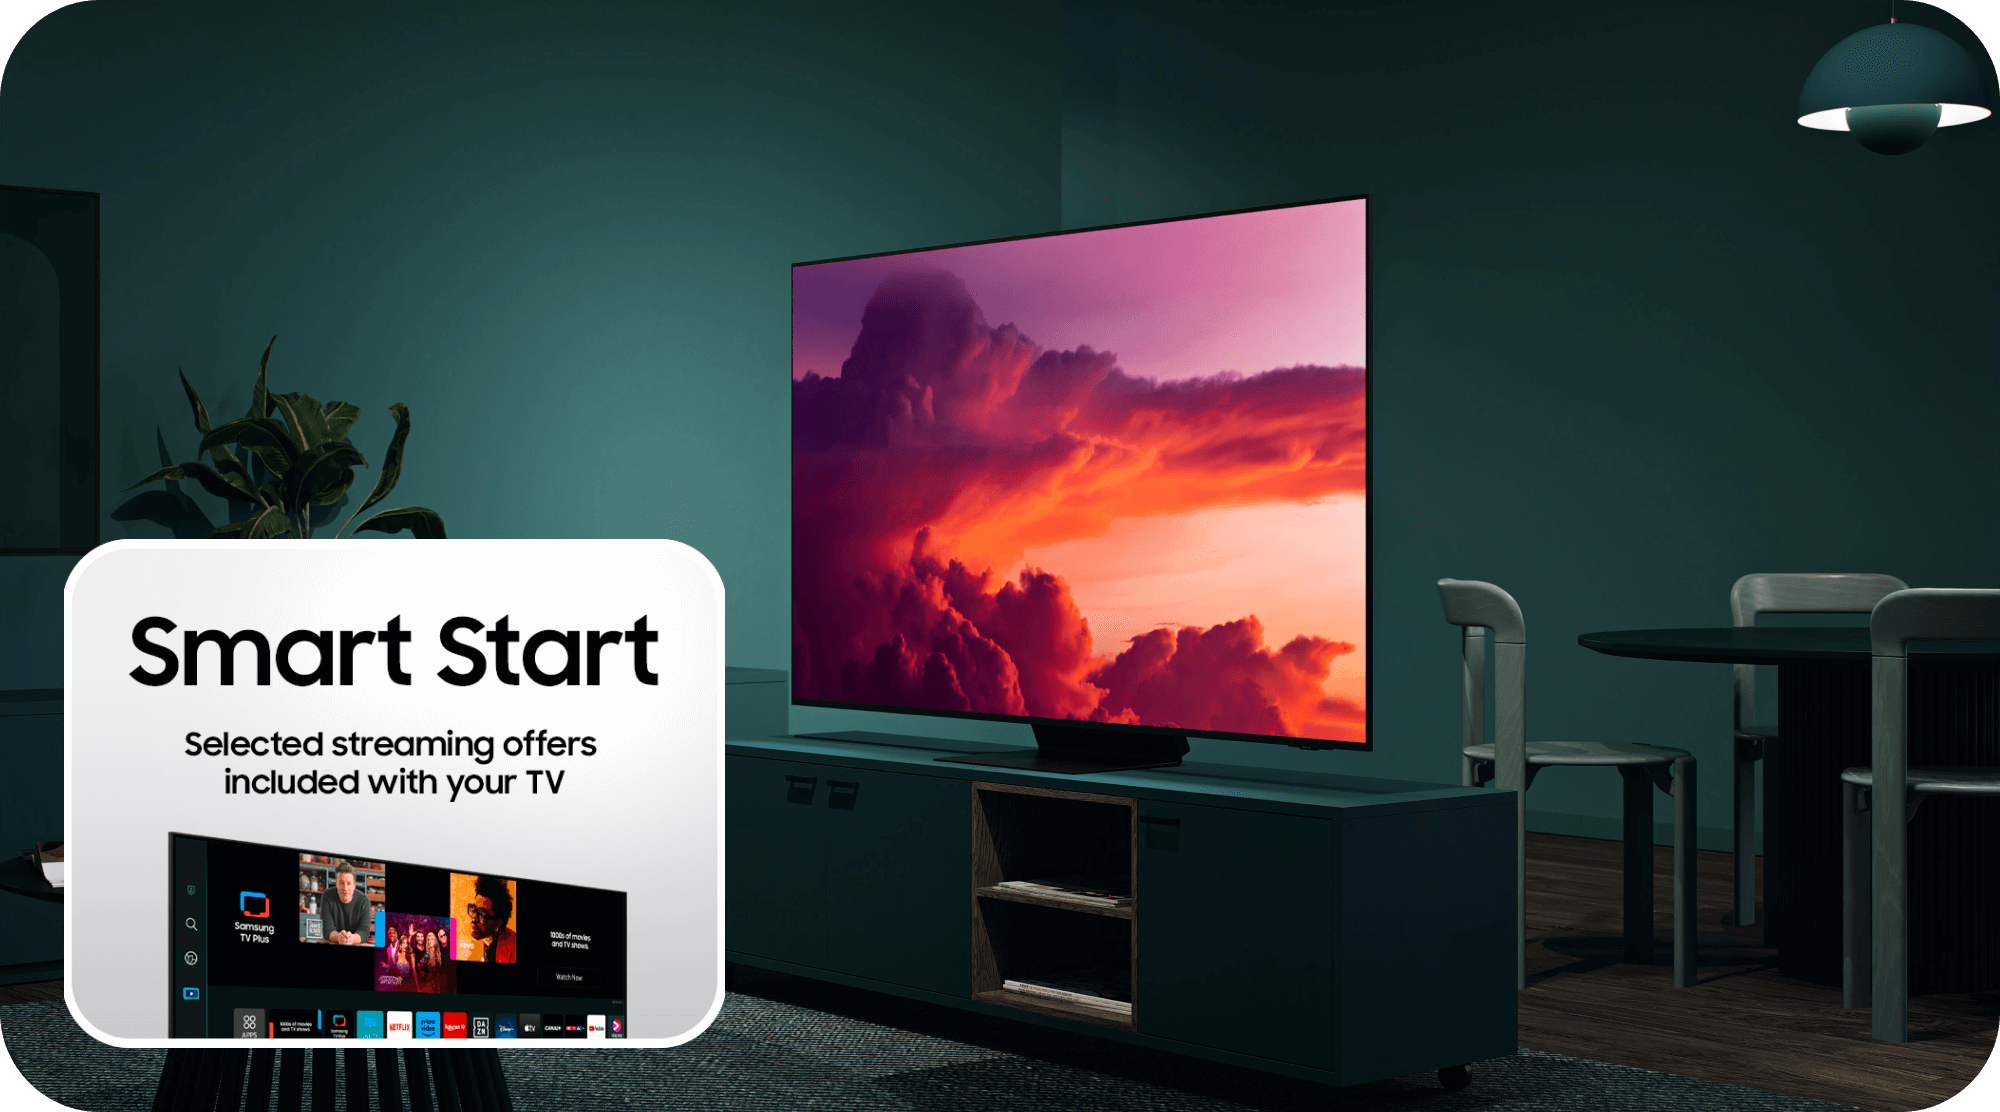 Samsung TV with Smart Start